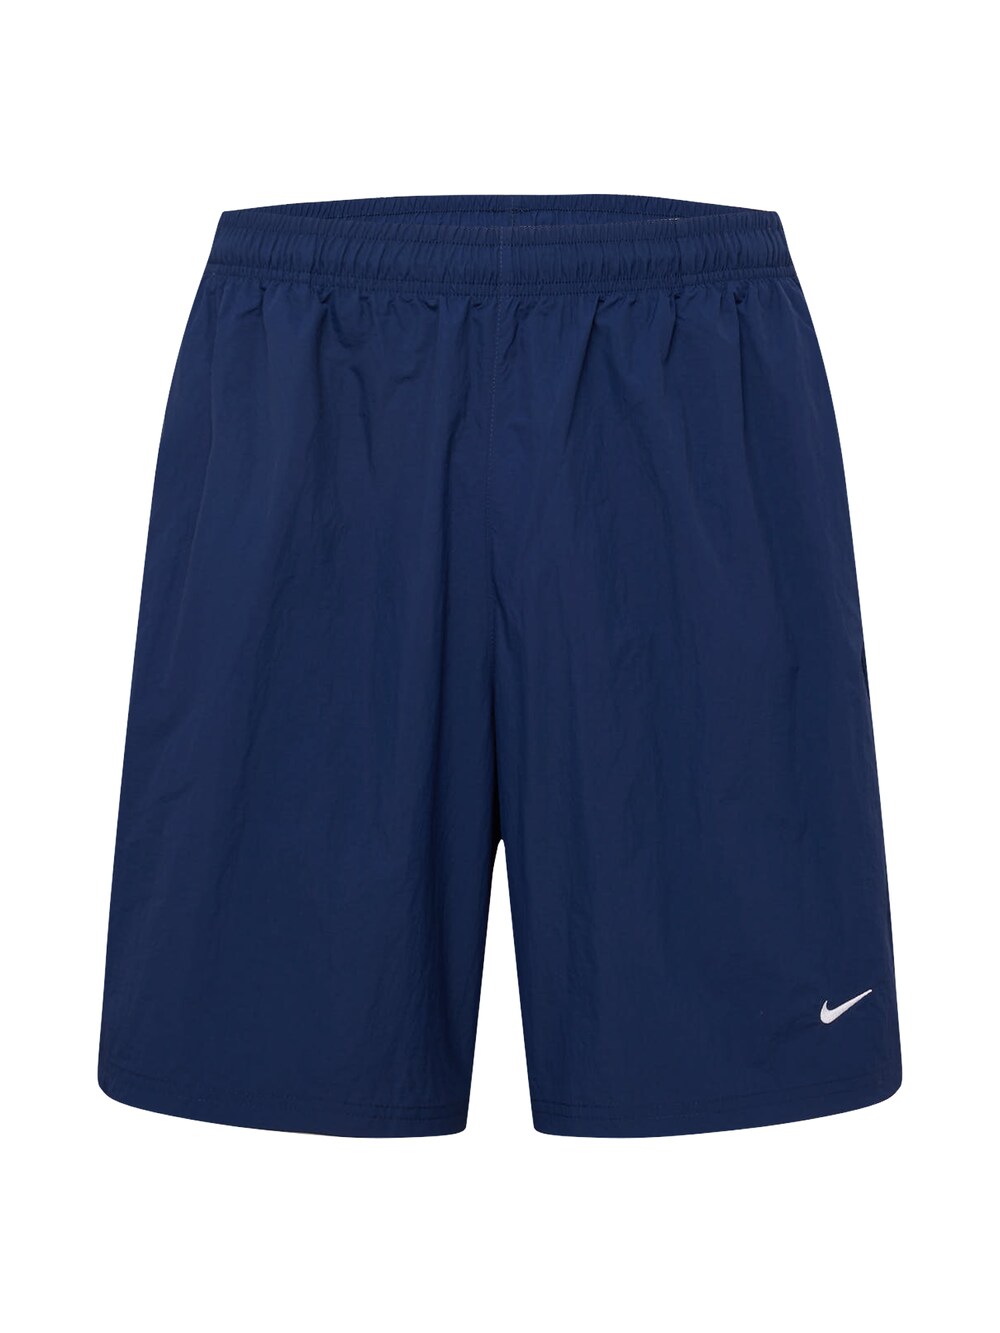 Обычные брюки Nike Sportswear Solo, темно-синий